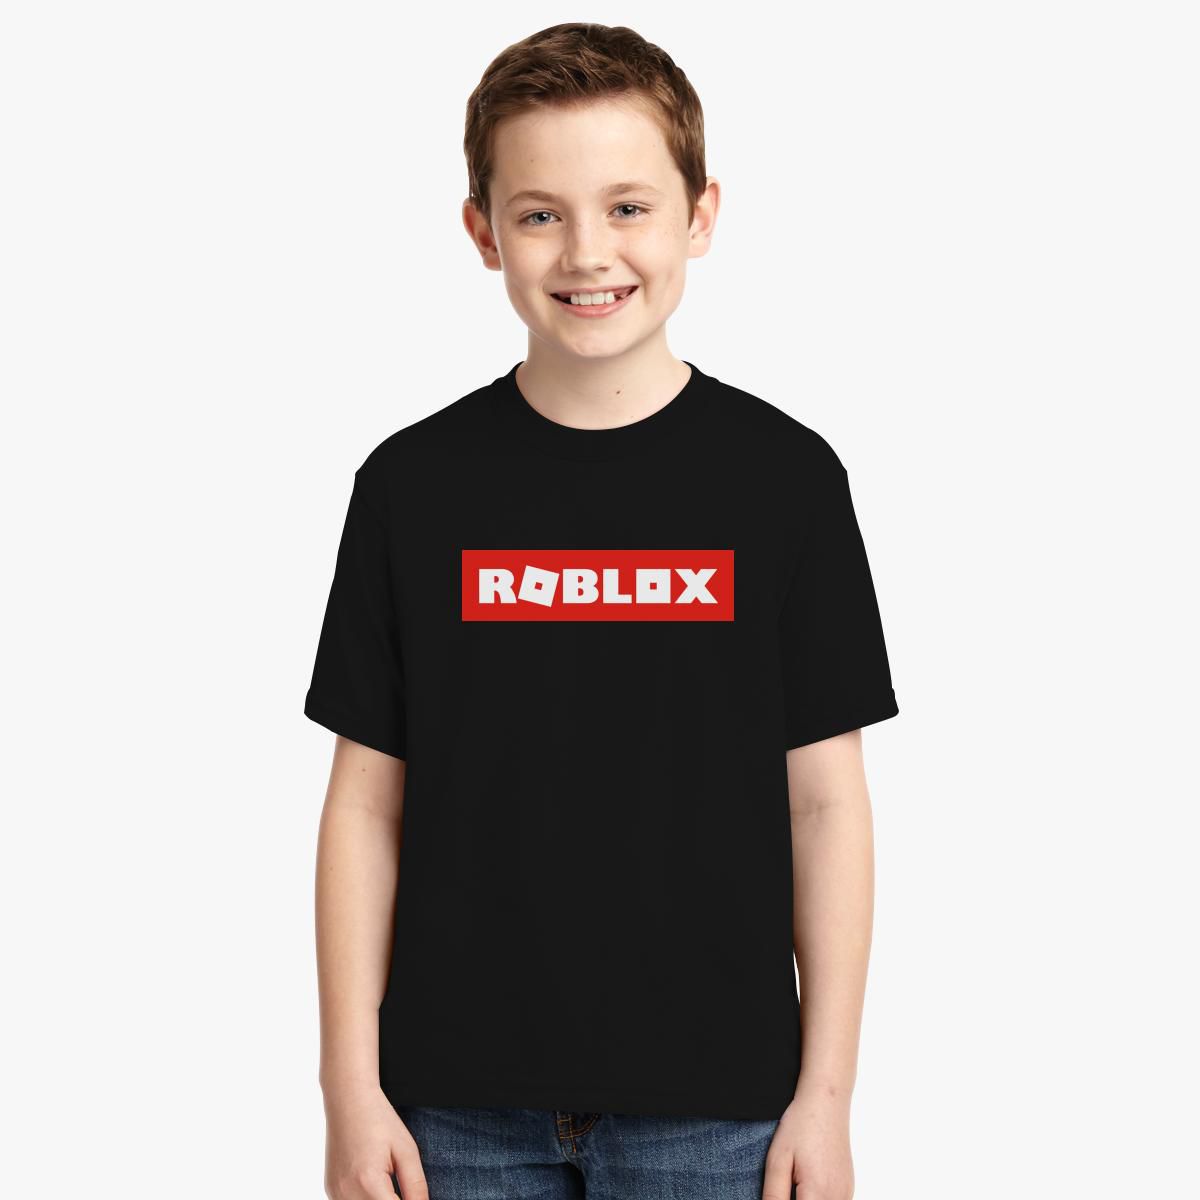 Roblox T Shirt Size Template | lupon.gov.ph